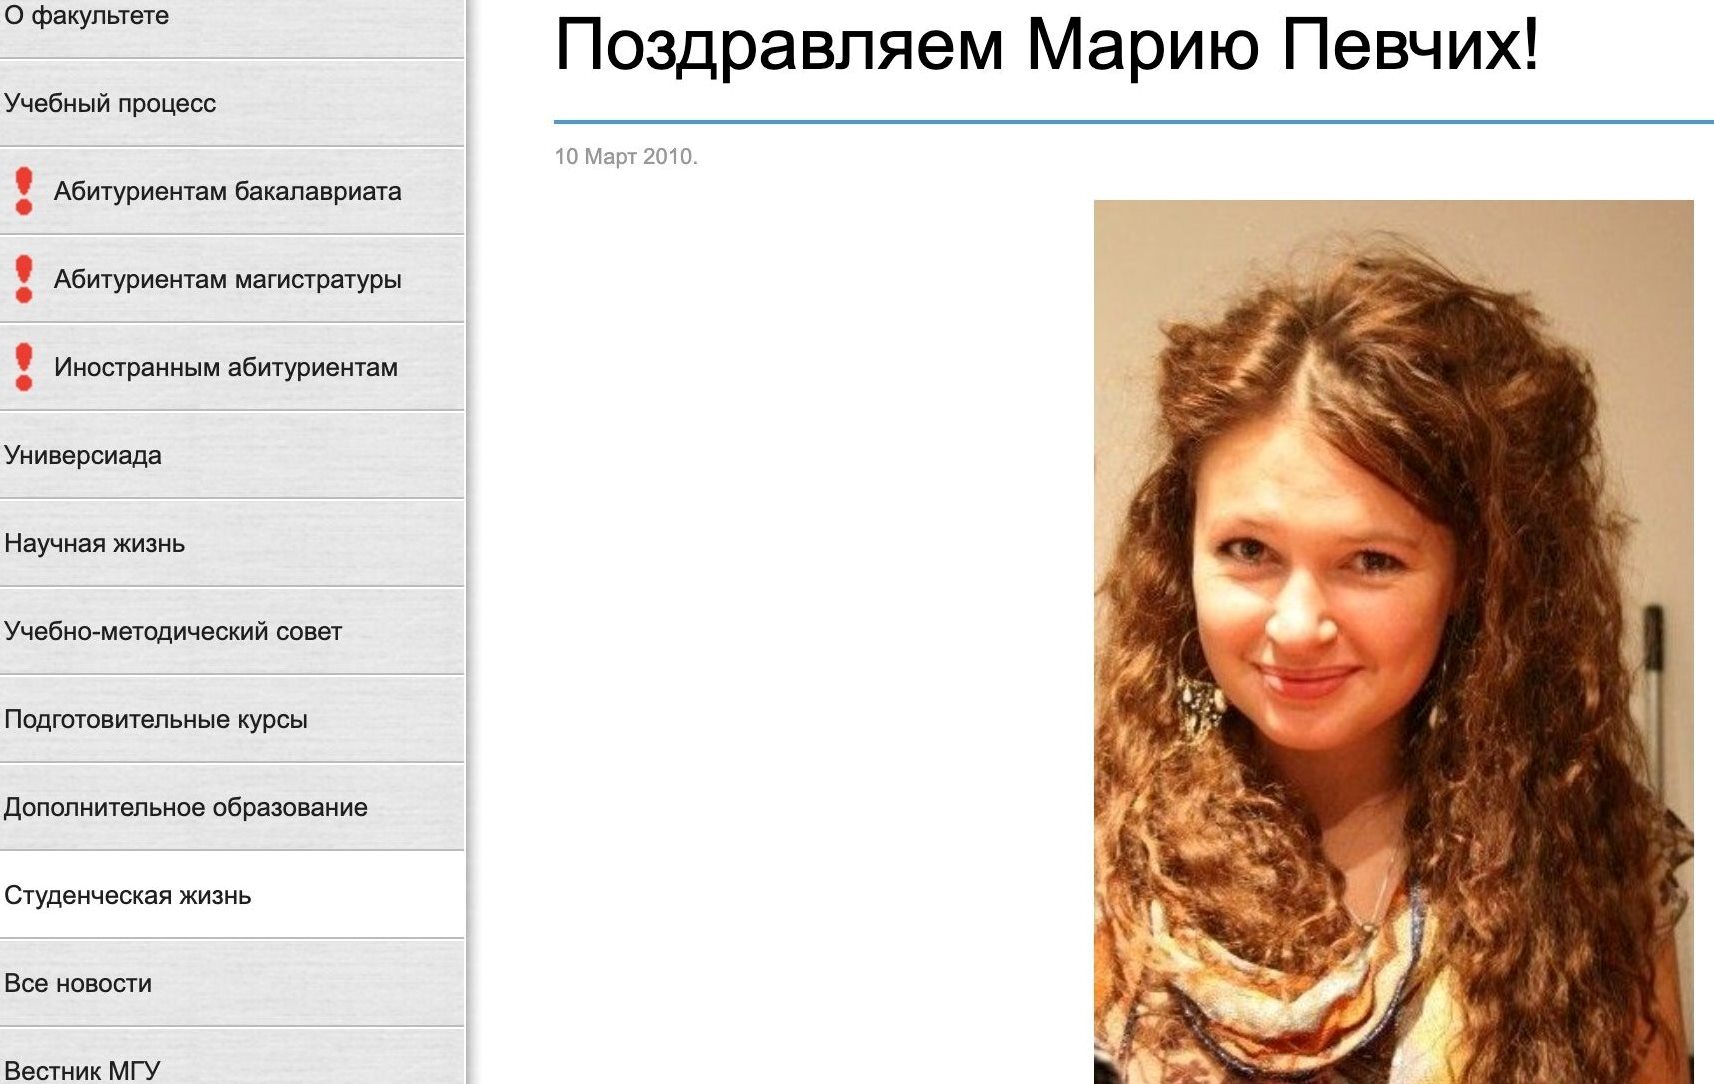 Скриншот с упоминанием Марии Певчих на сайте МГУ/Twitter Марии Певчих